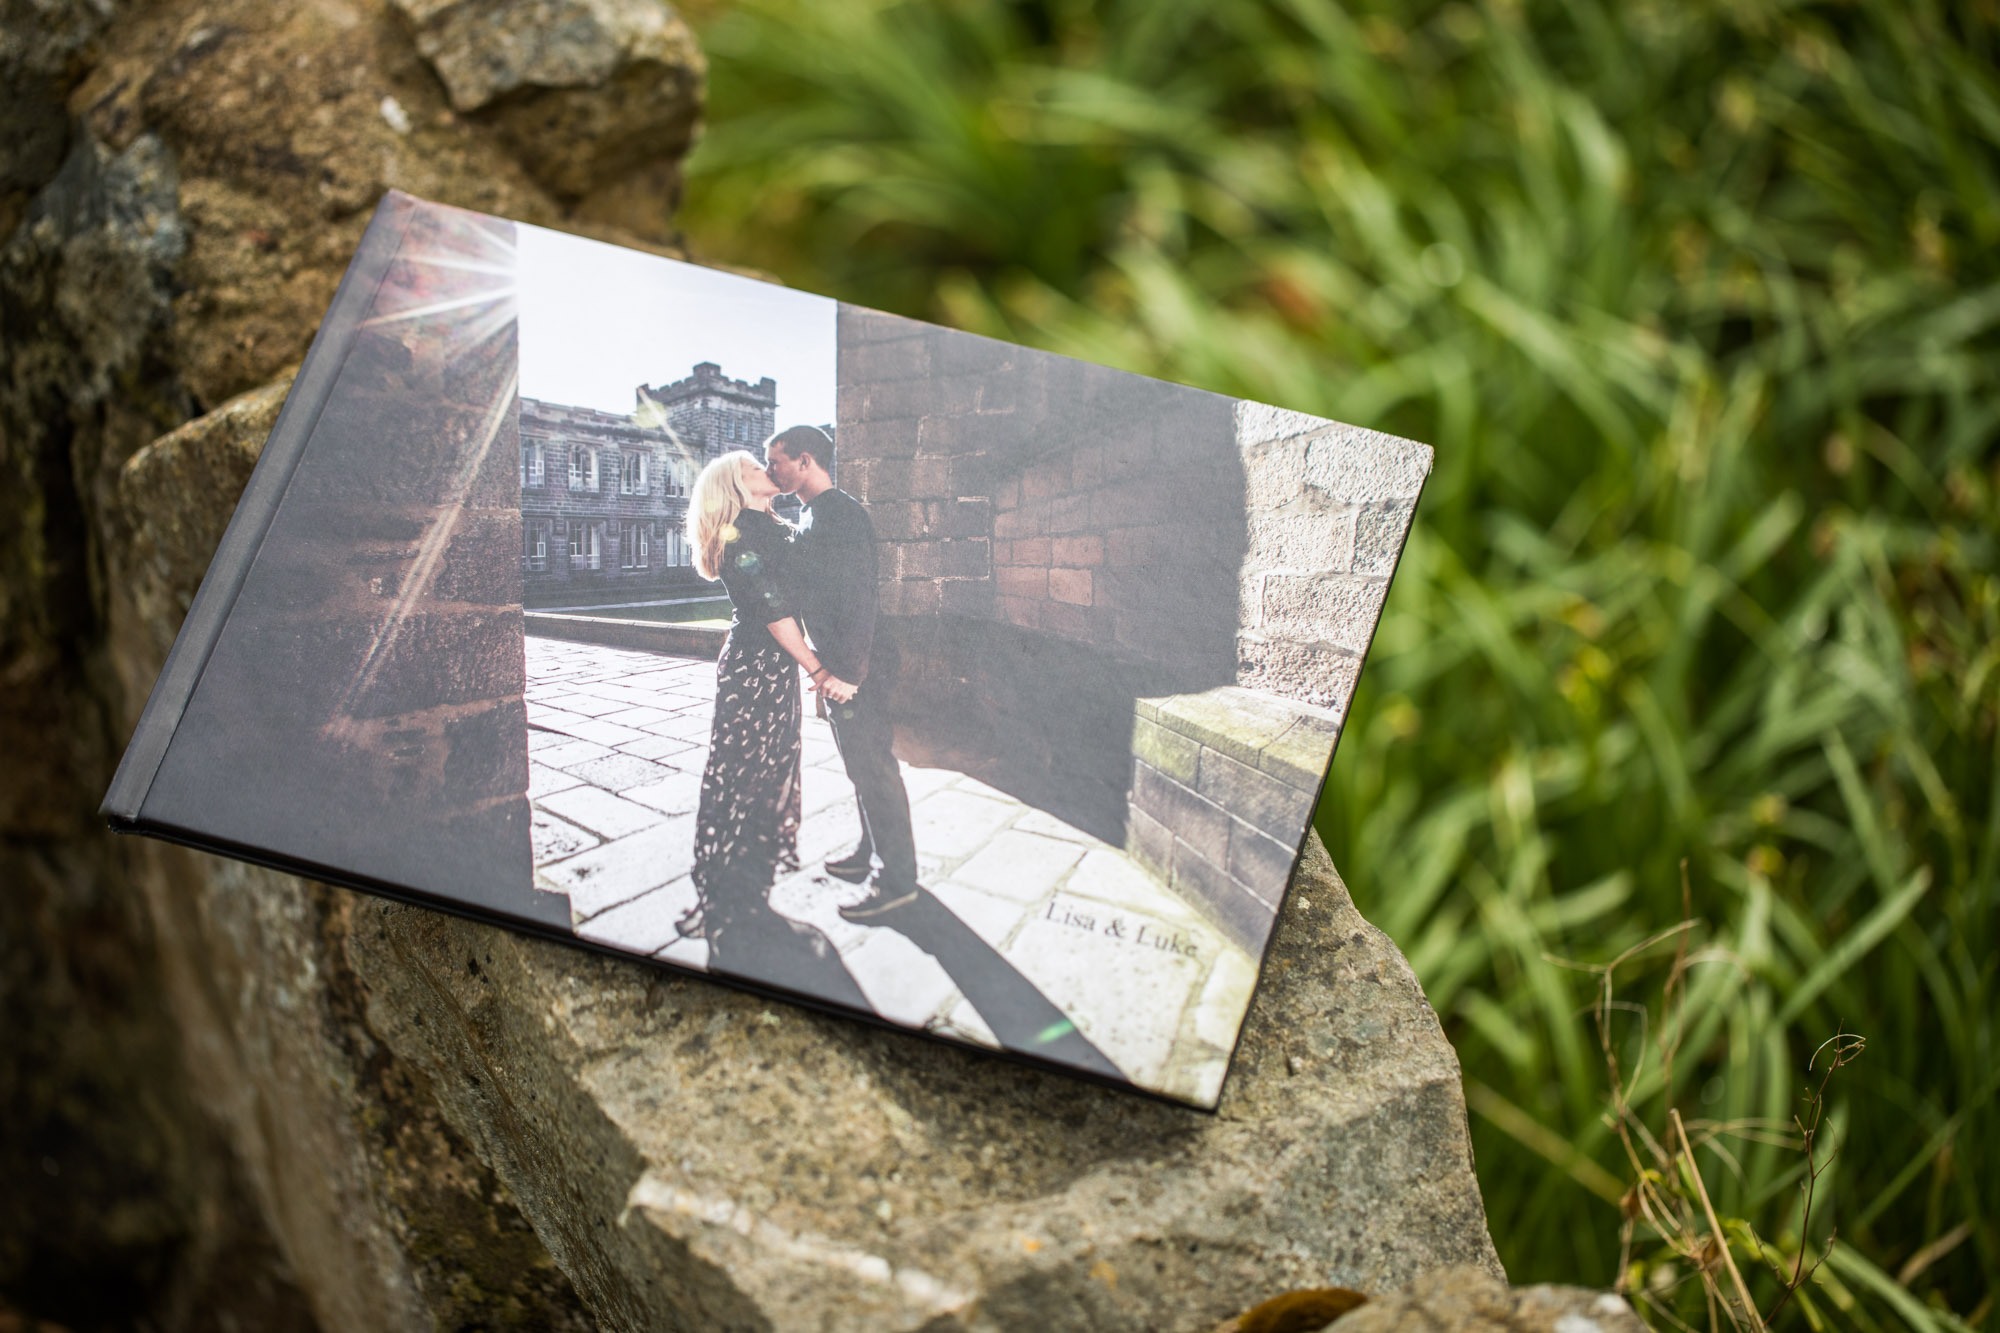 An example of a wedding album by Jonathan Addie, an Aberdeen based wedding photographer.